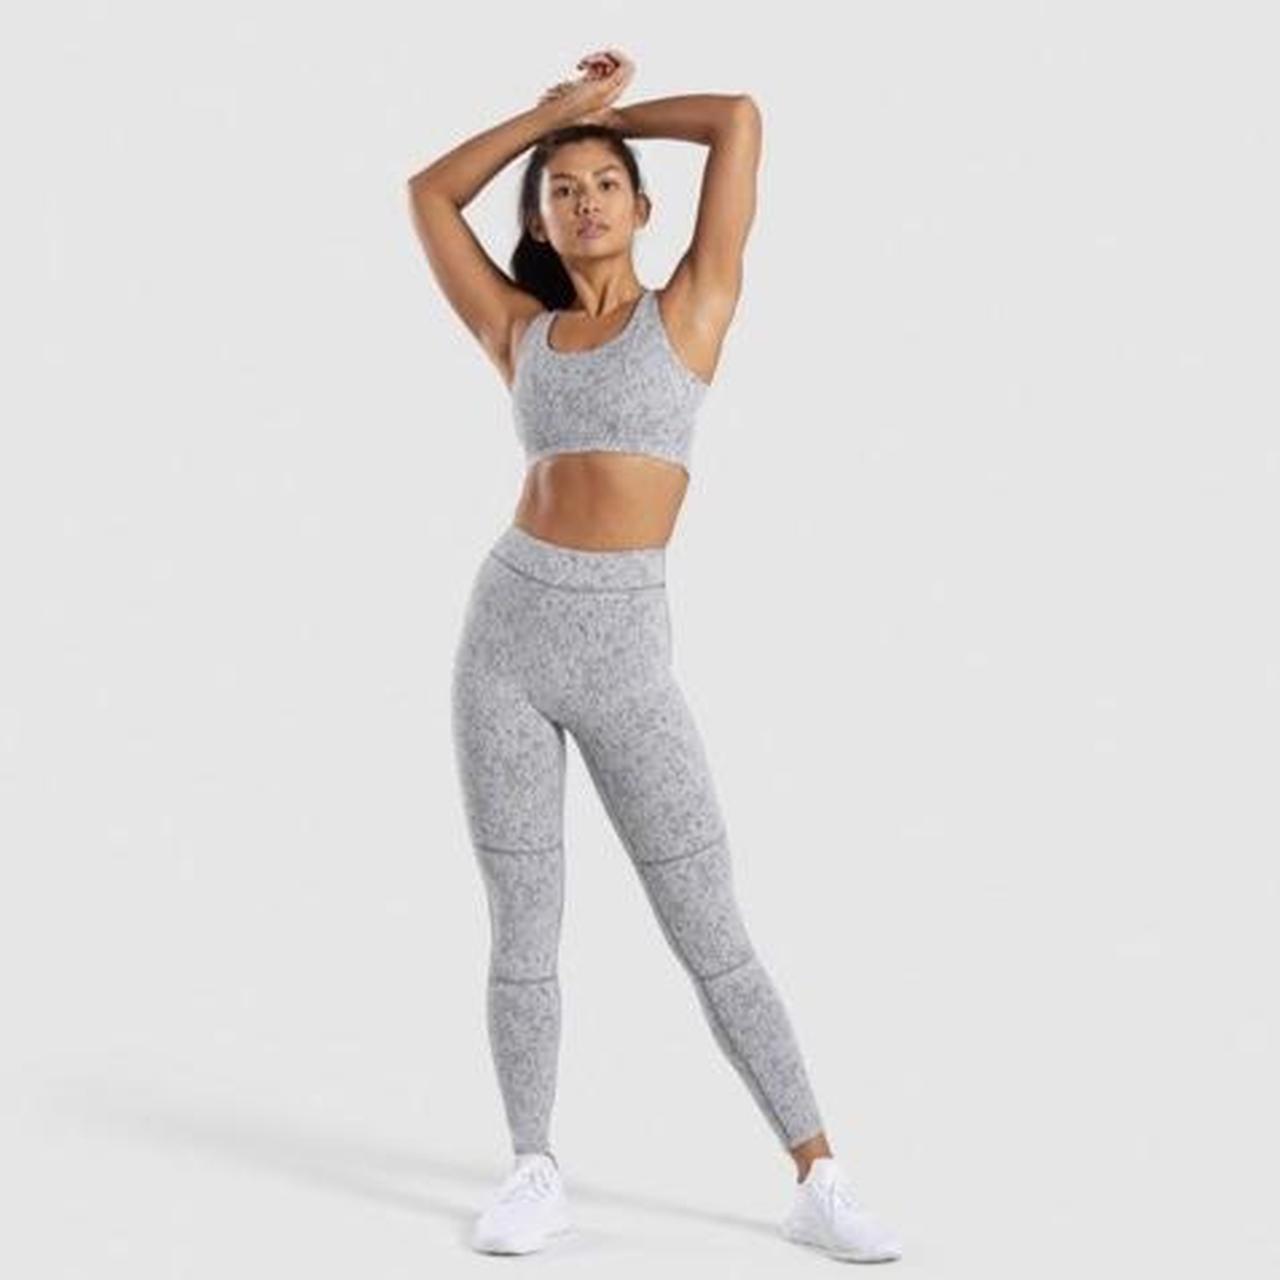 gymshark set leggings and sports bra size xs - Depop